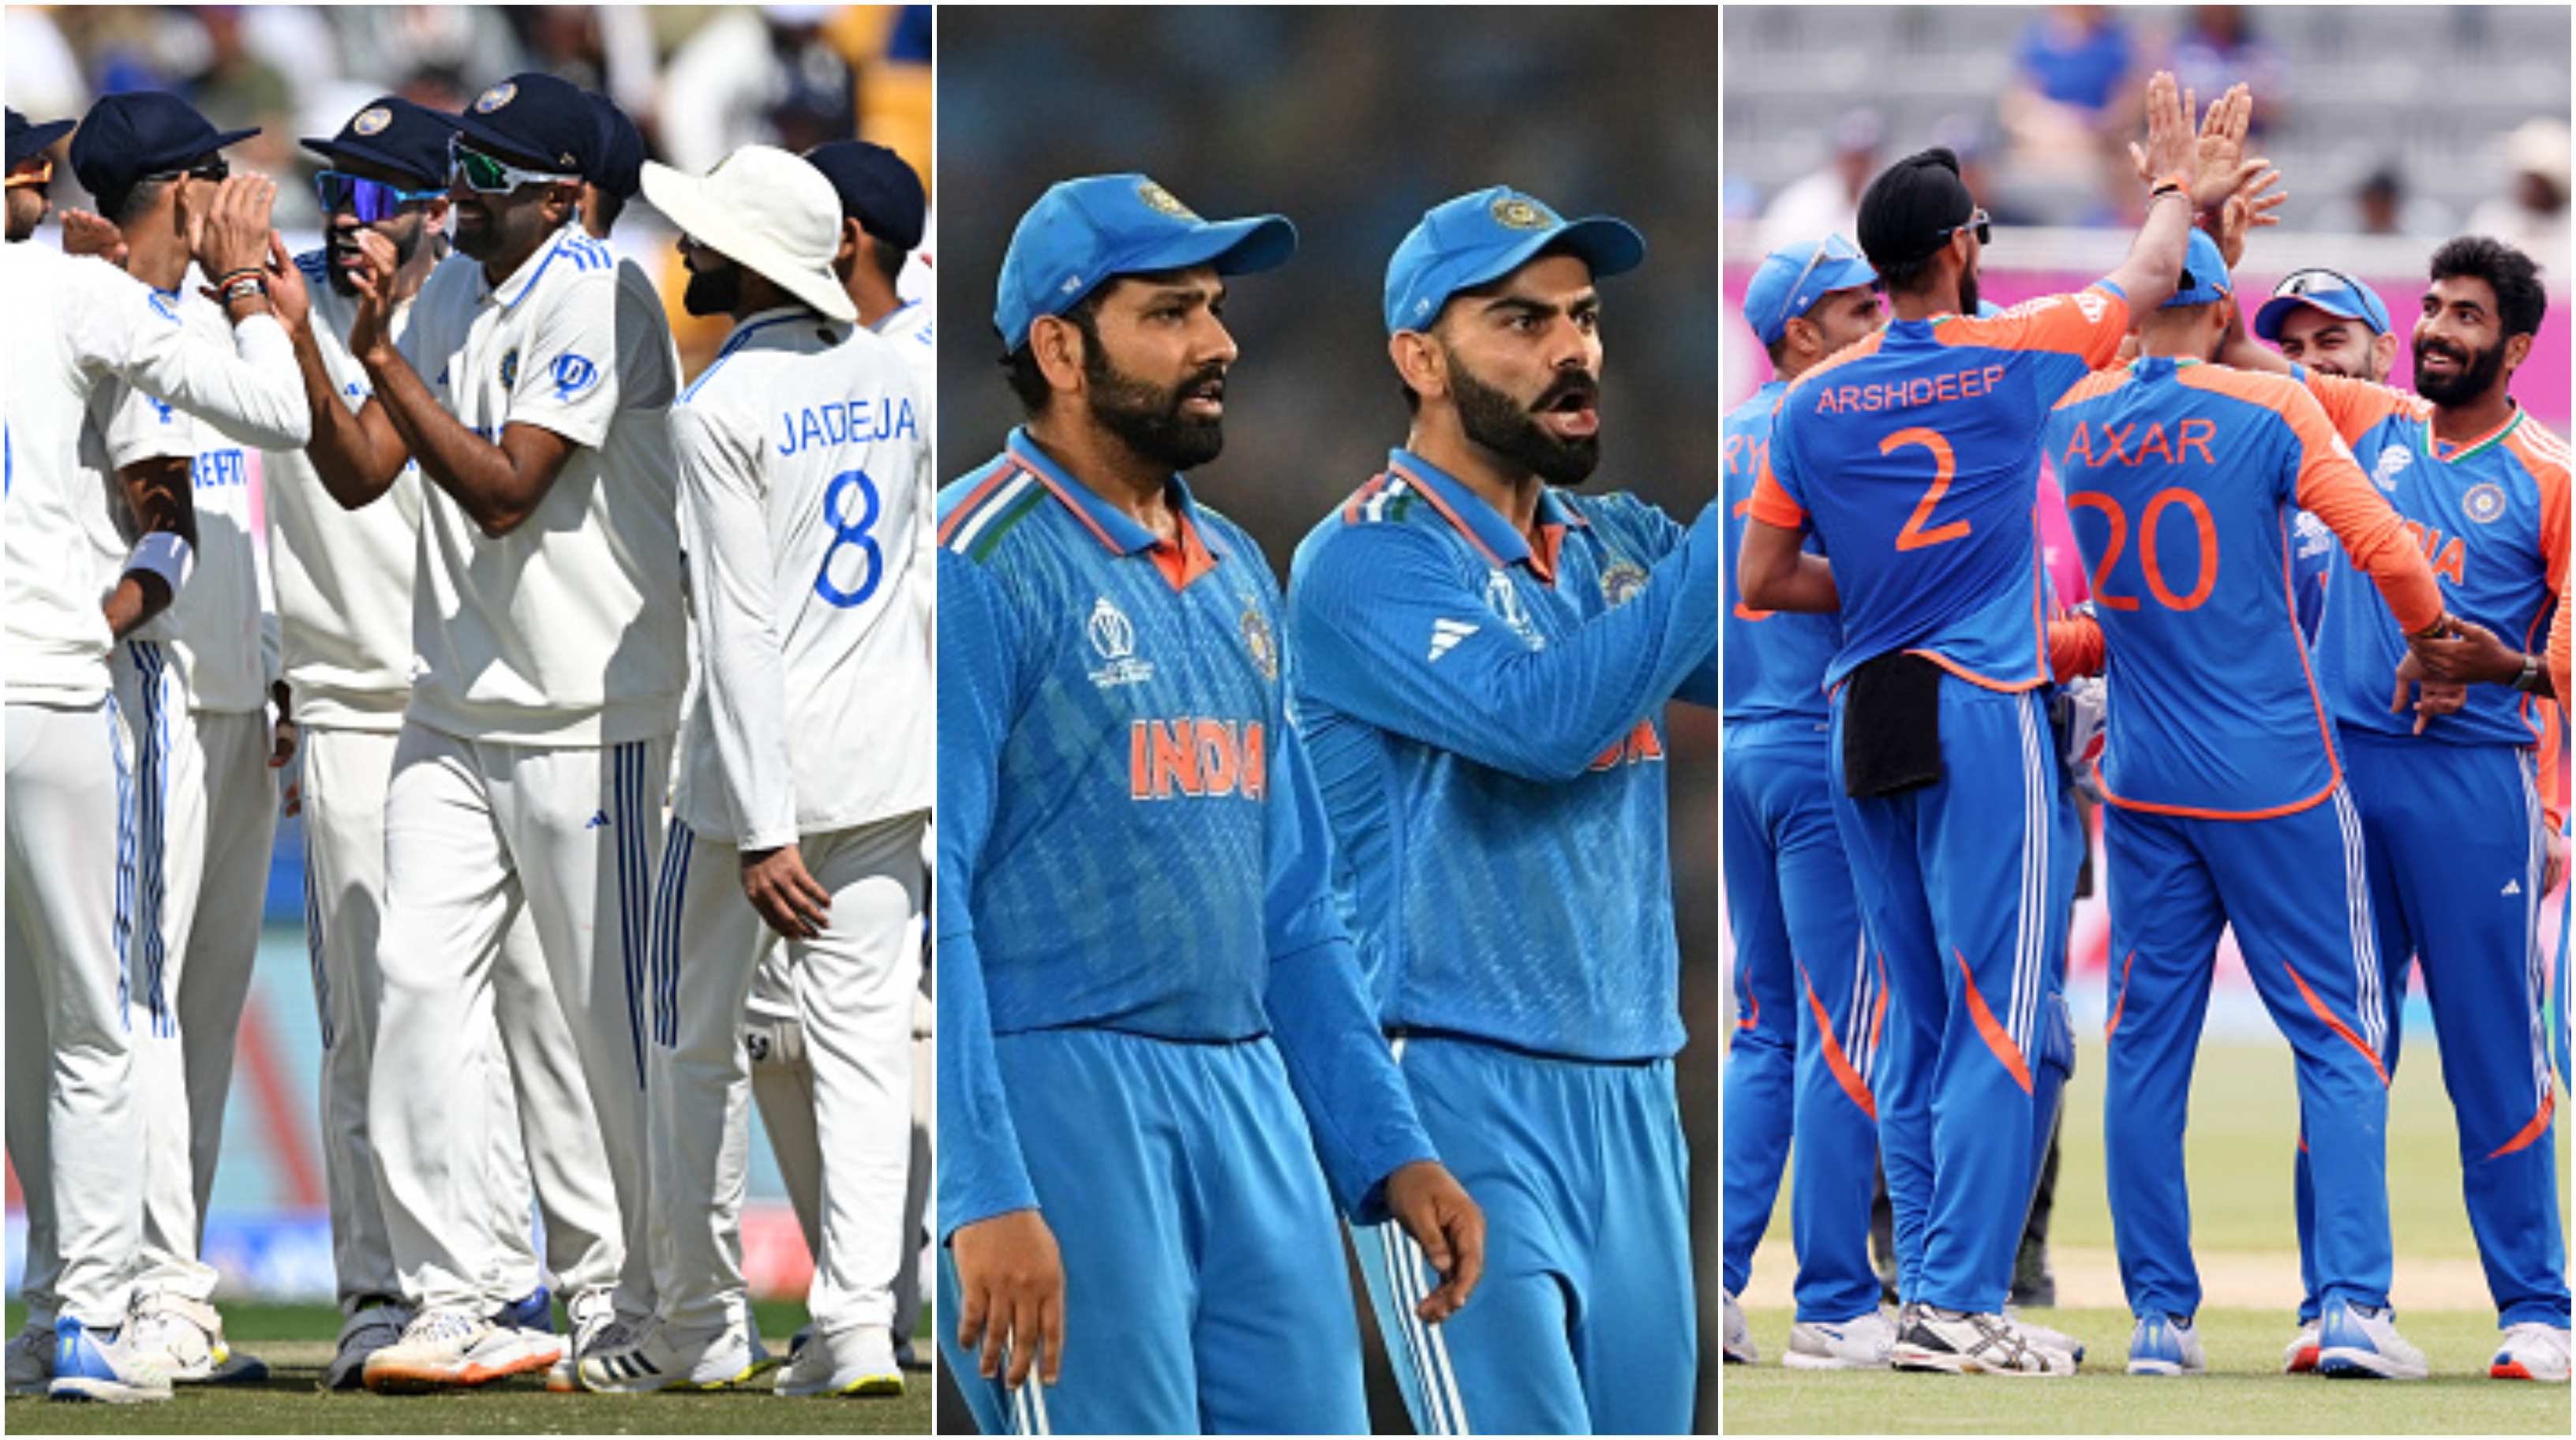 Team India | Getty